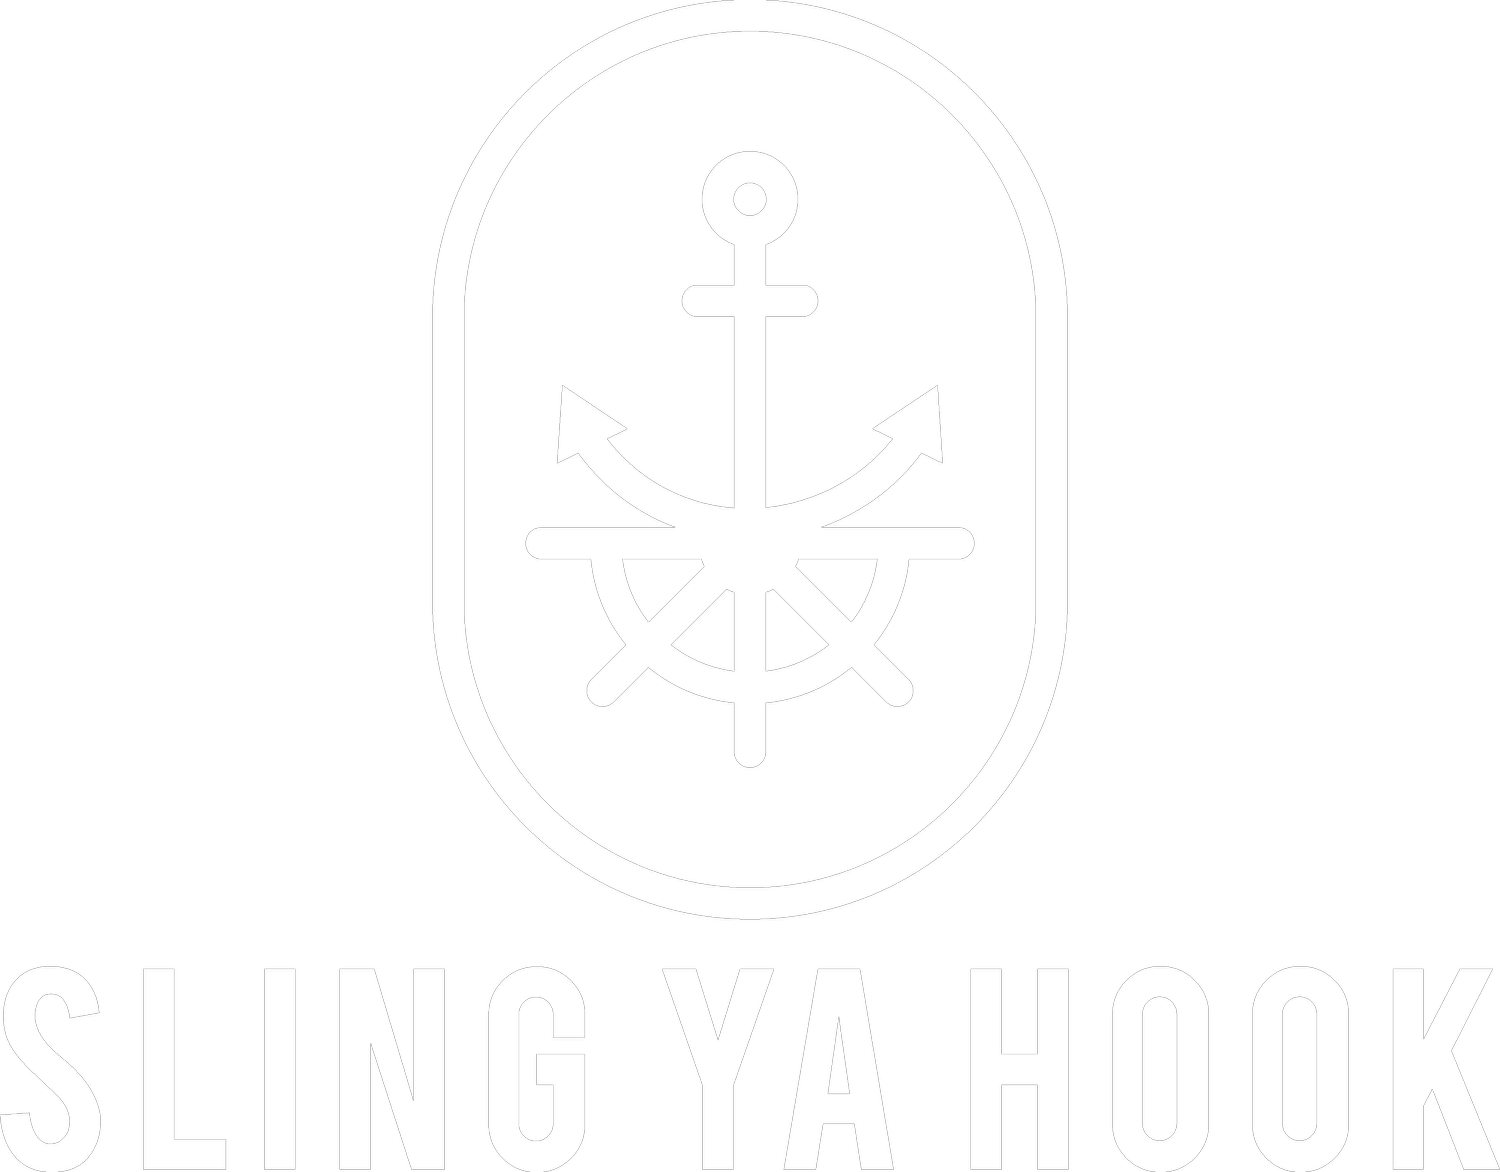 Sling Ya Hook